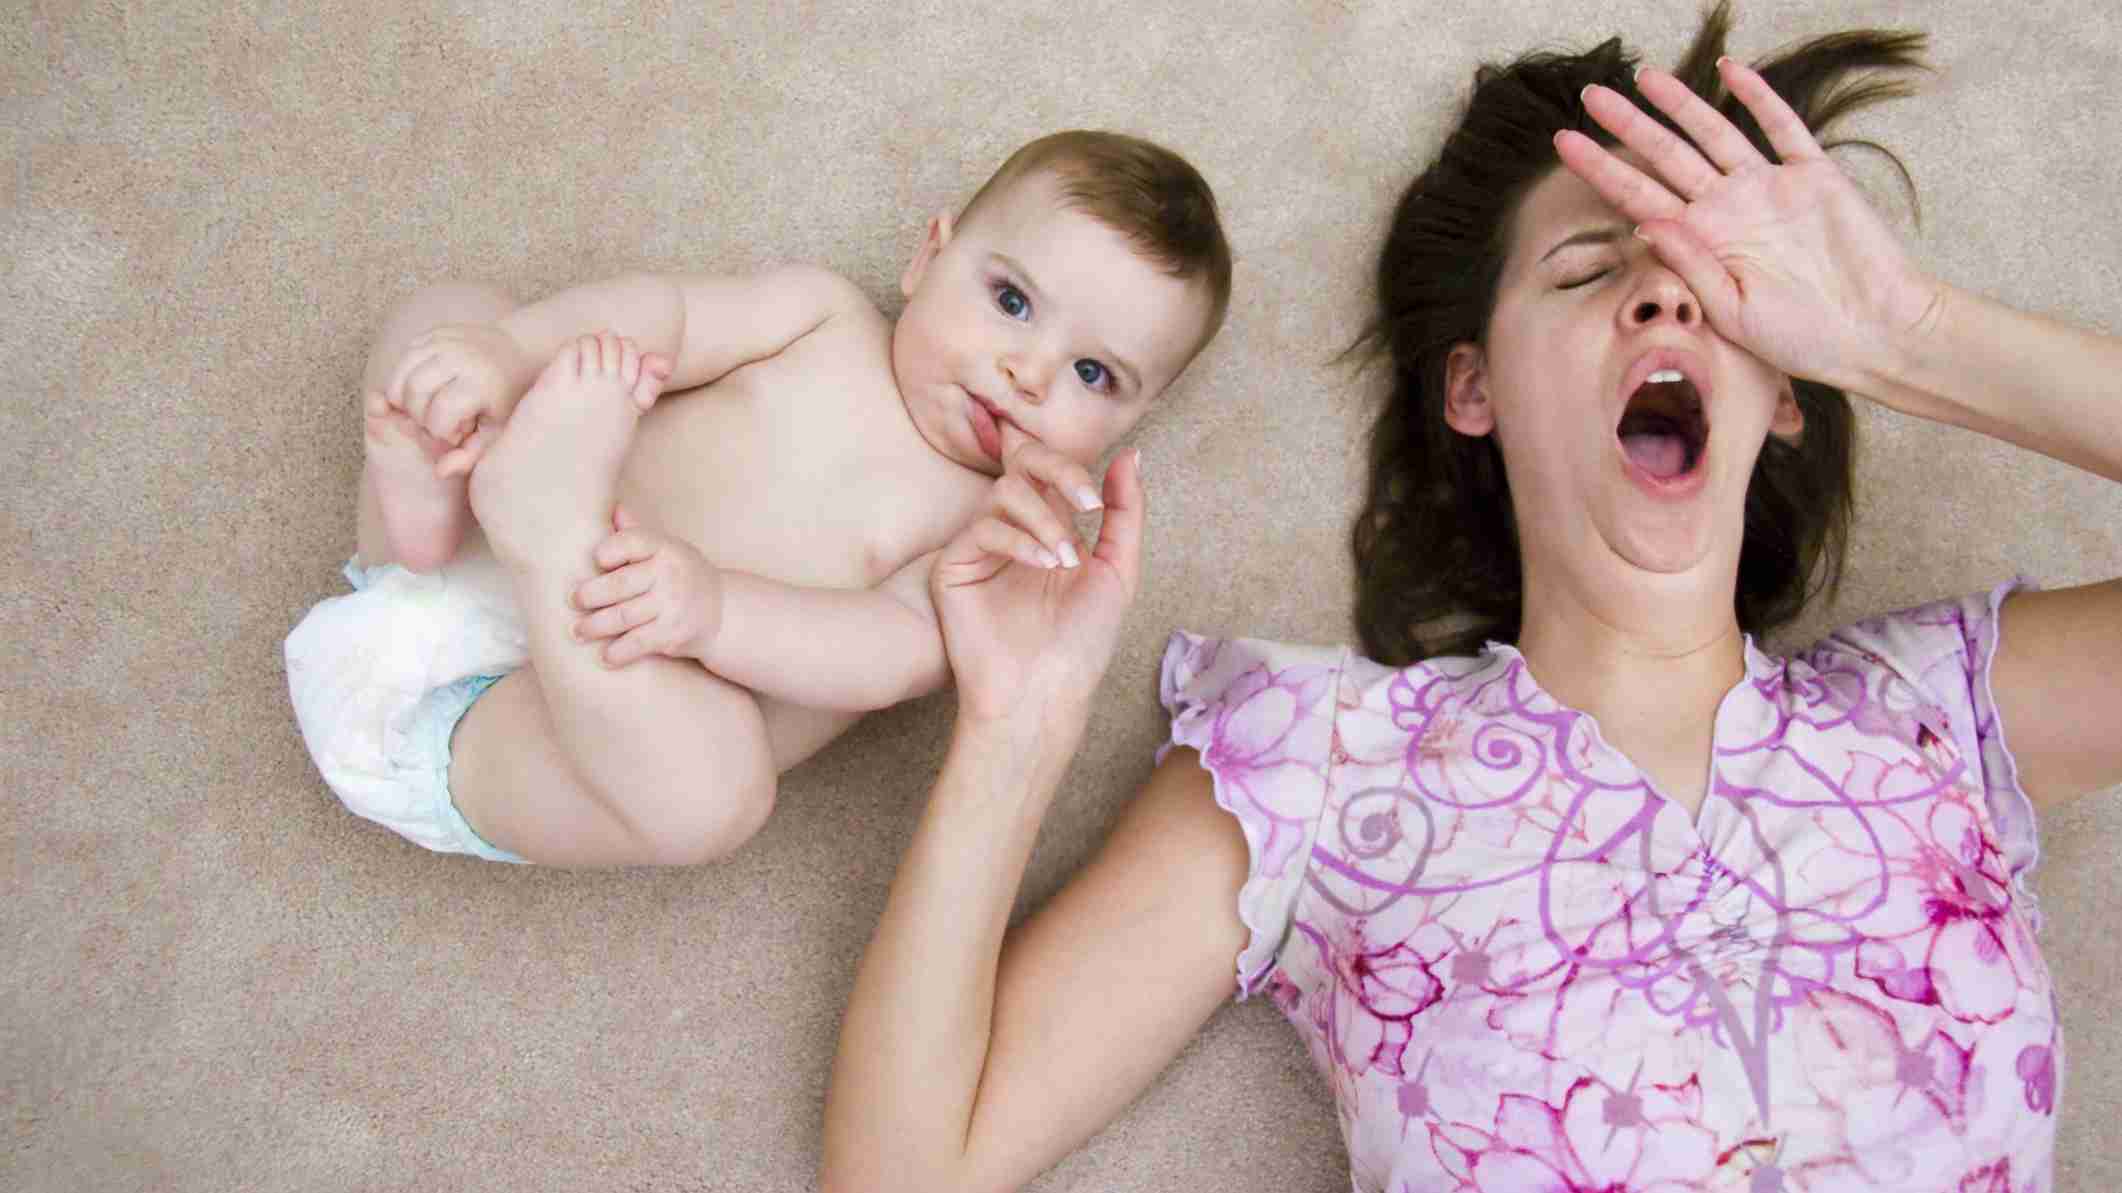 Mother's cranky behaviour due to less sleep